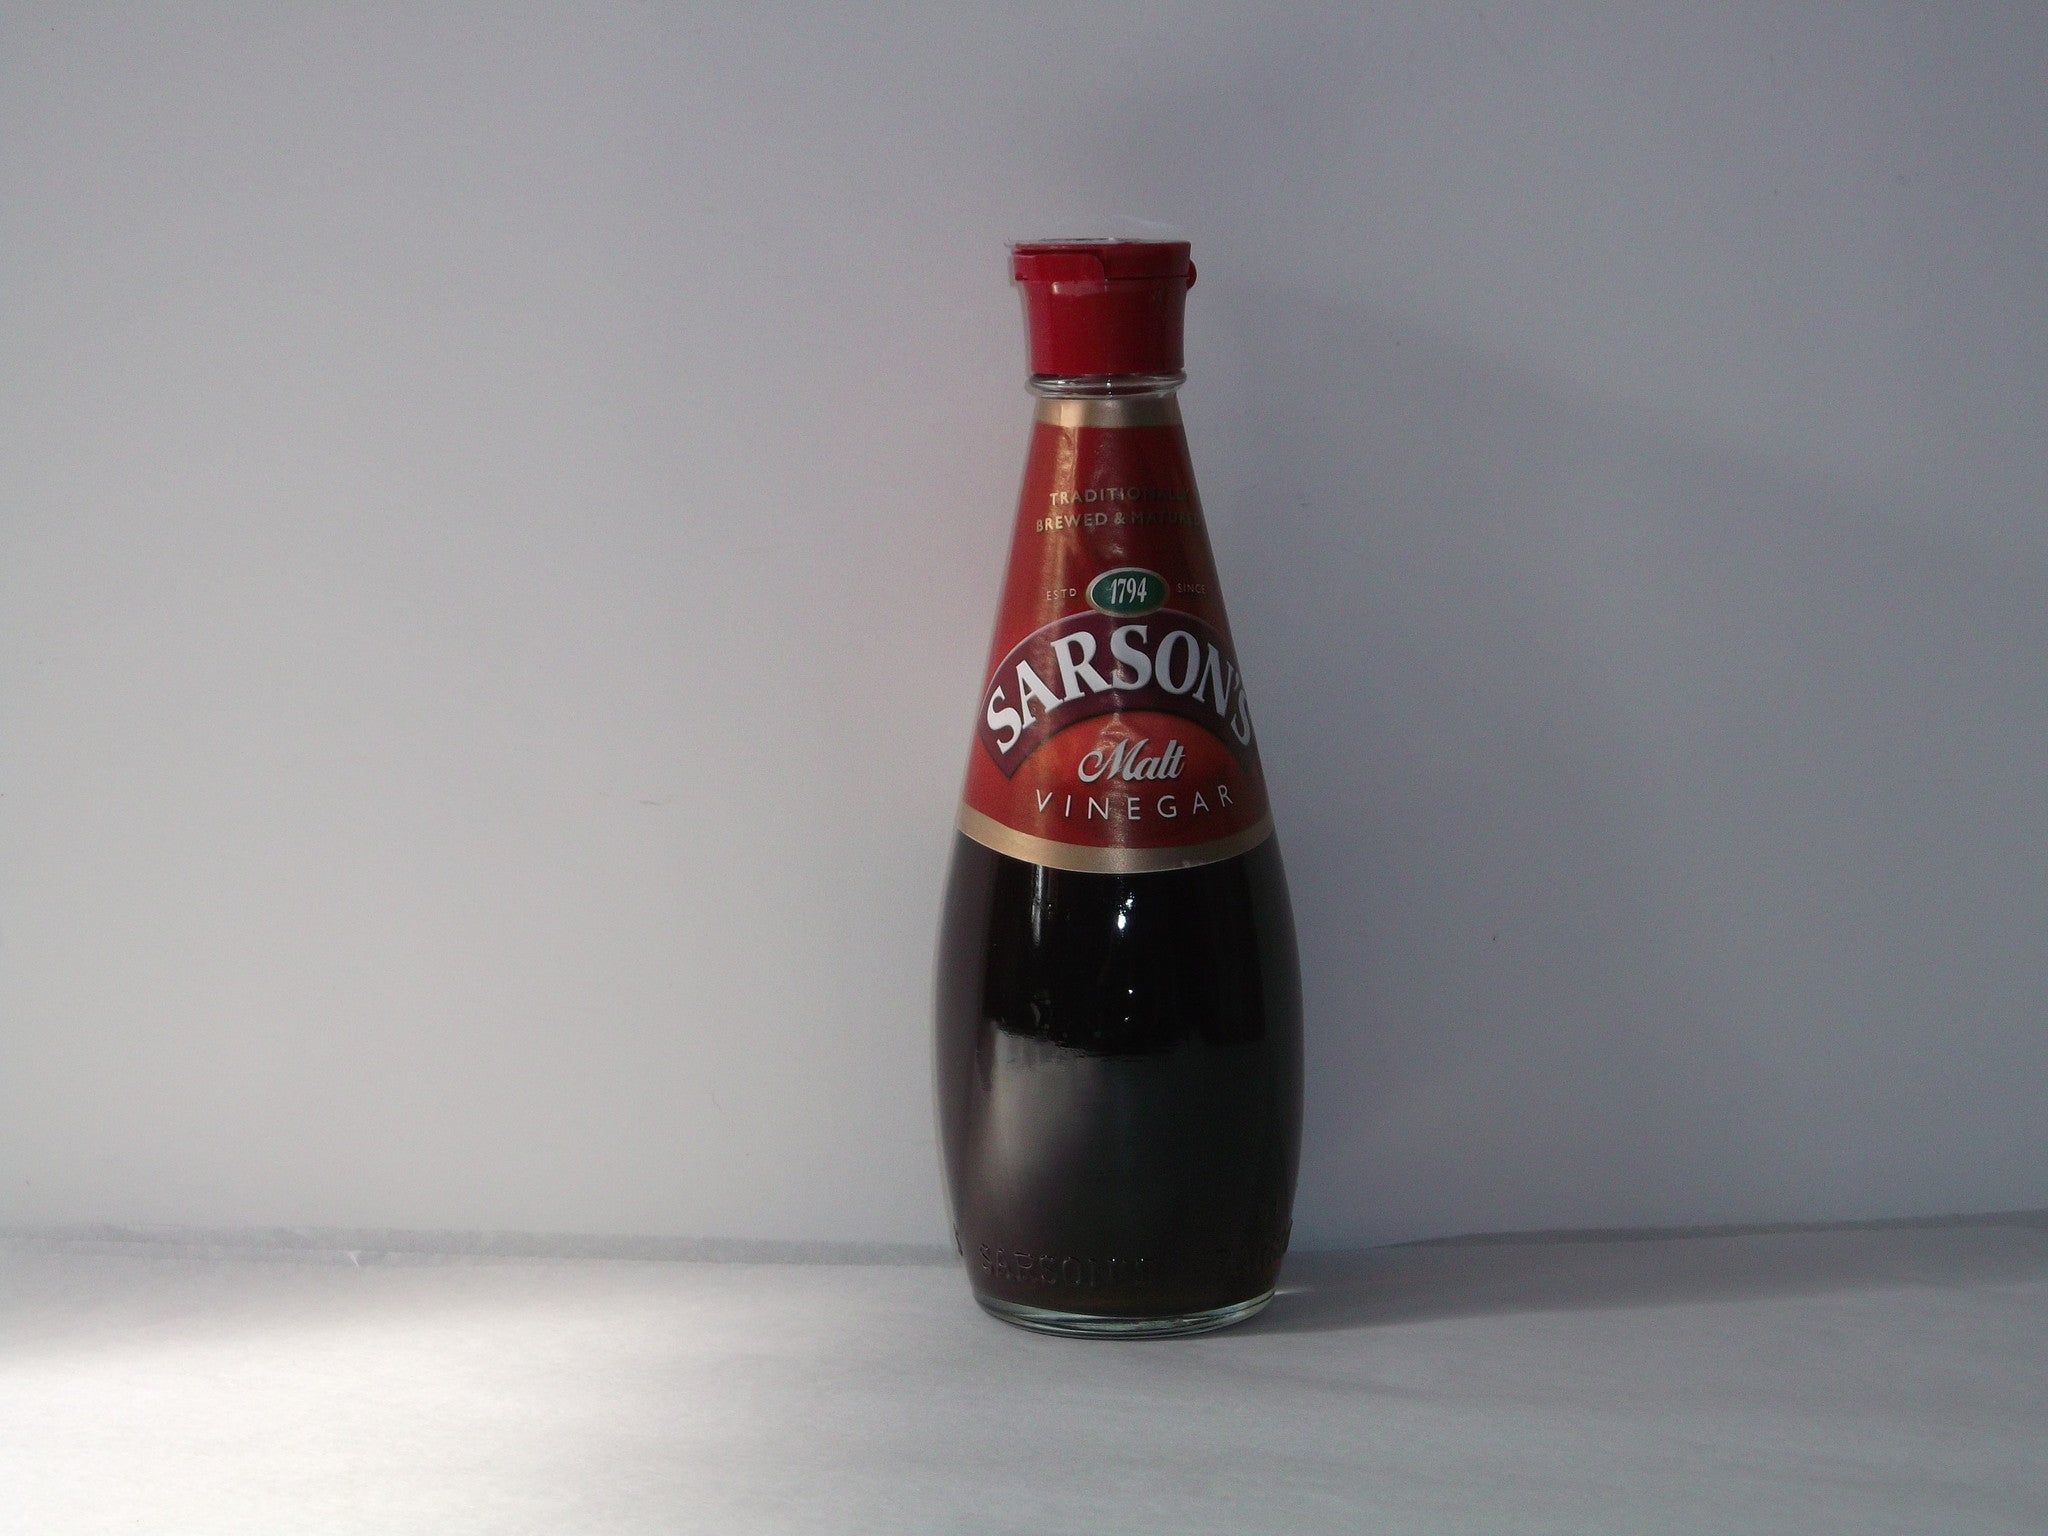 Sarsons Original Malt Vinegar 250ml